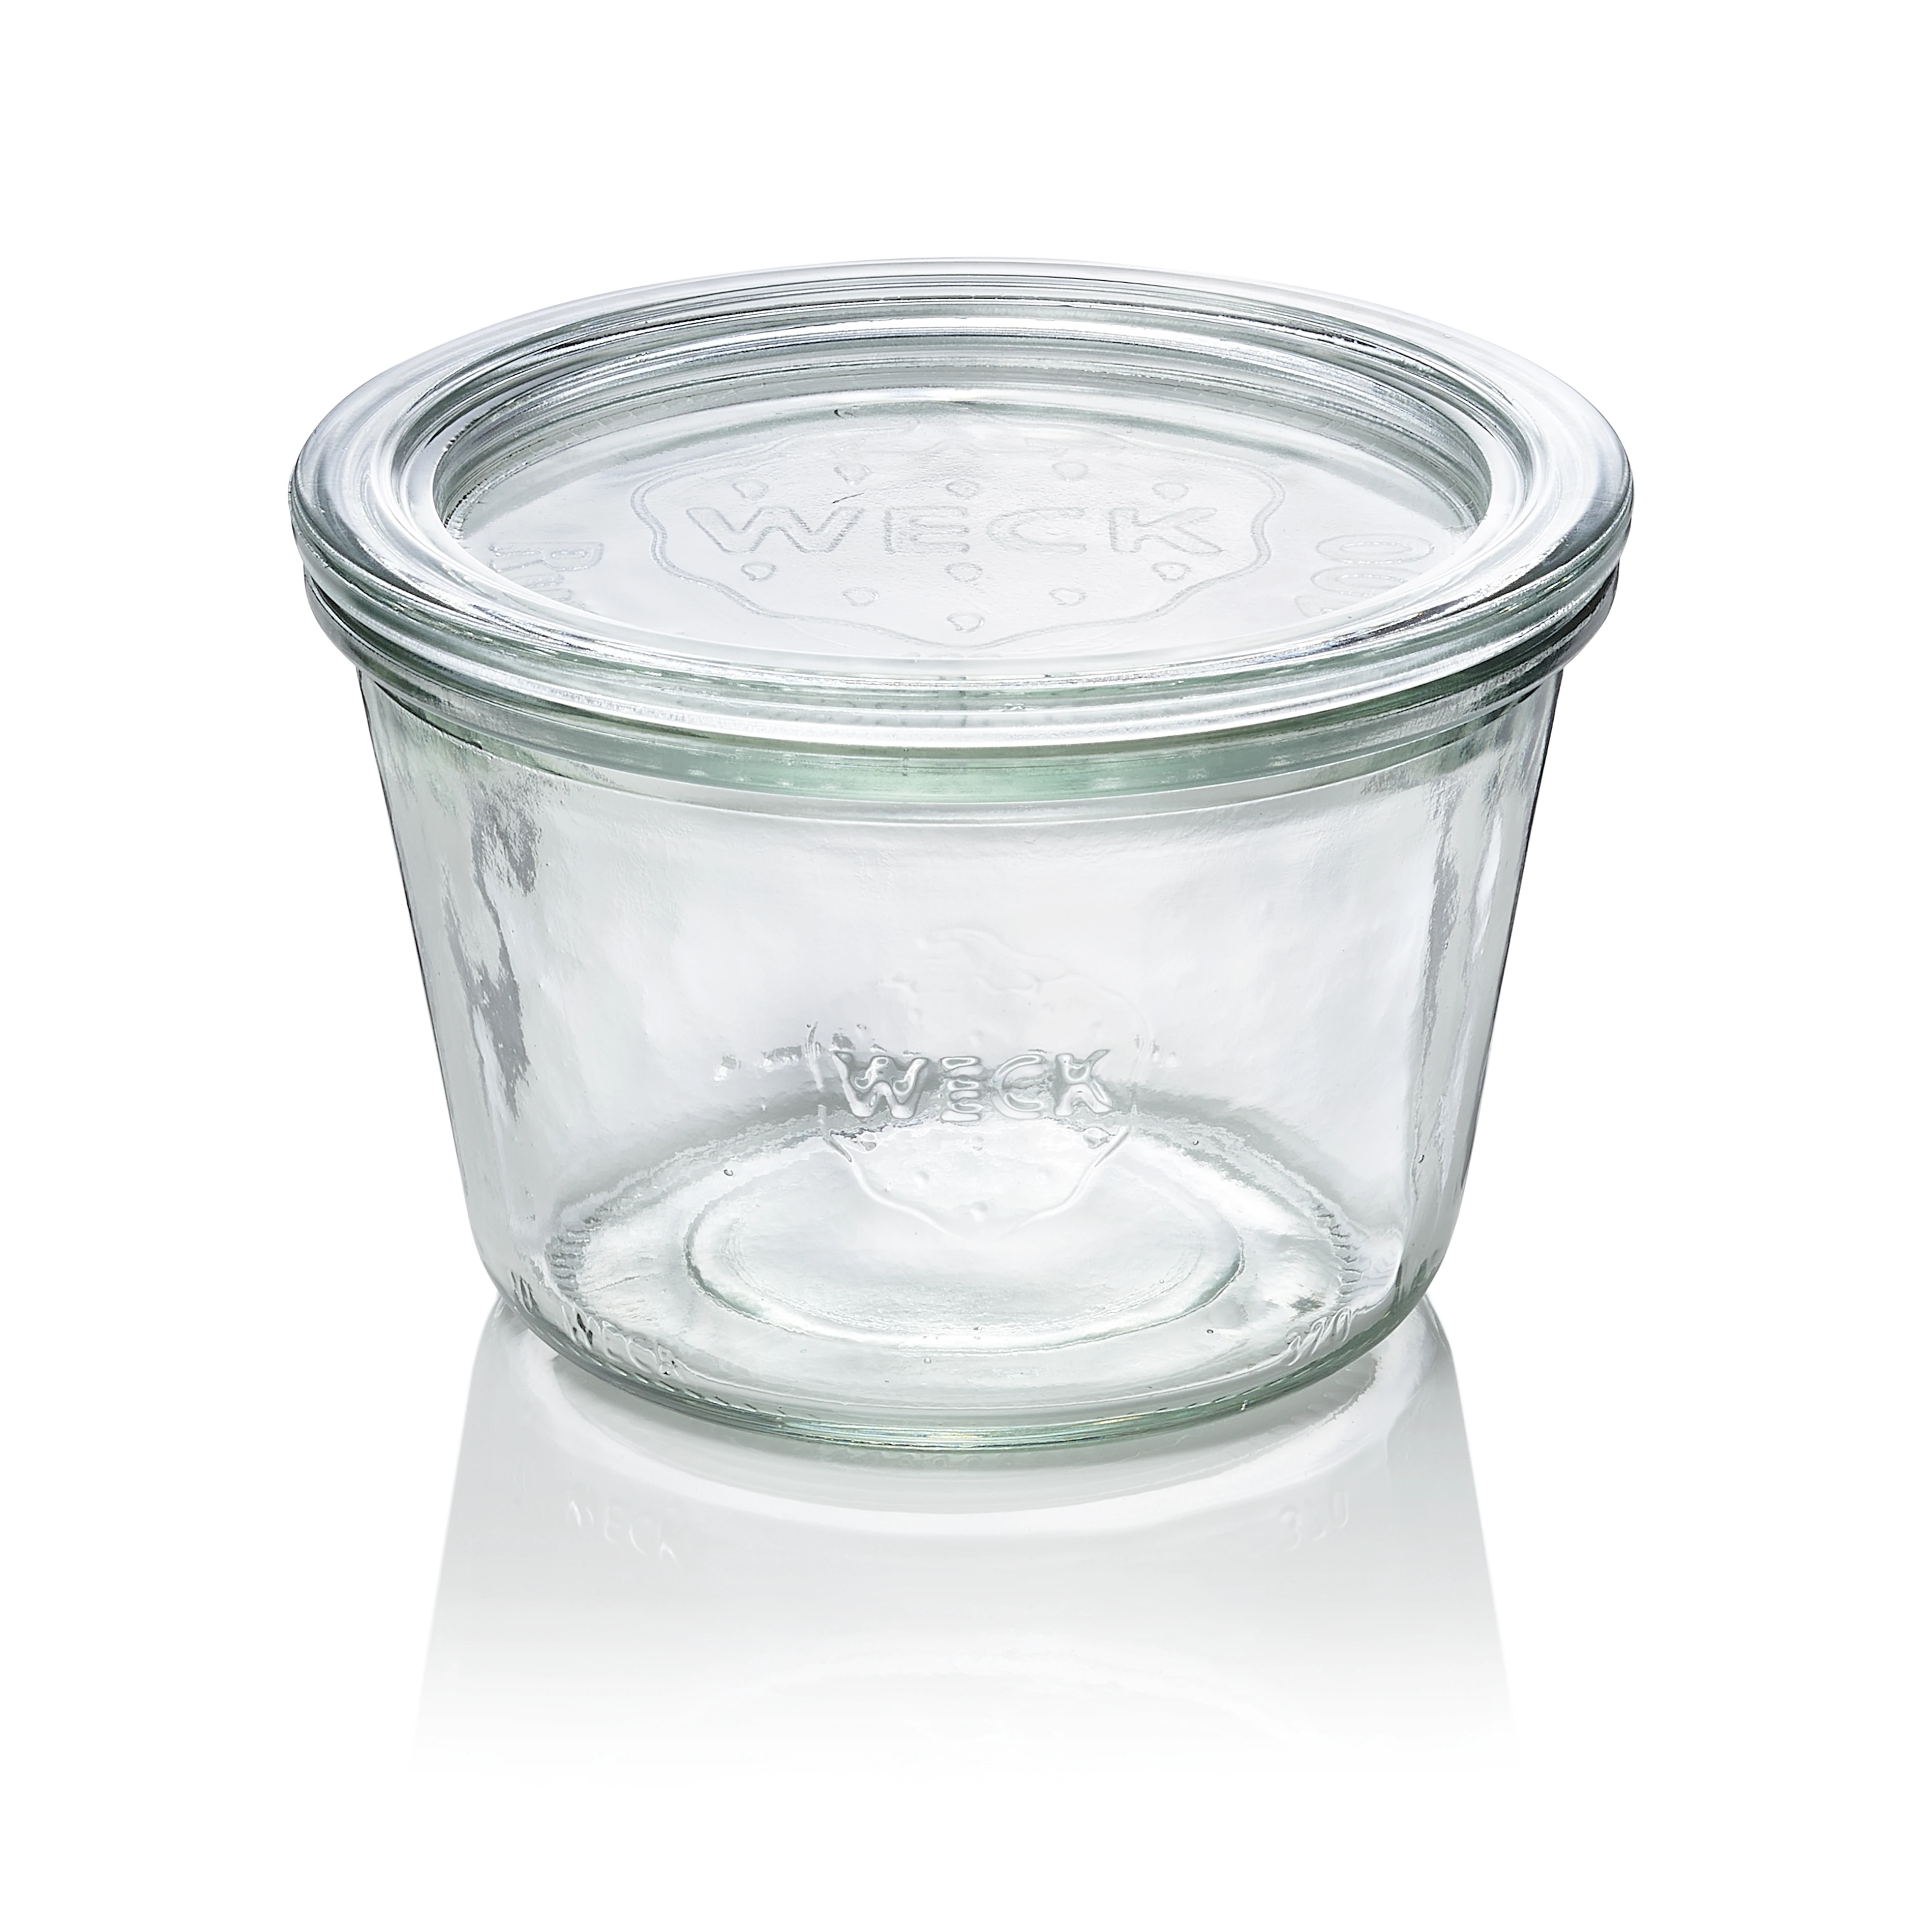 Overturn glass jar